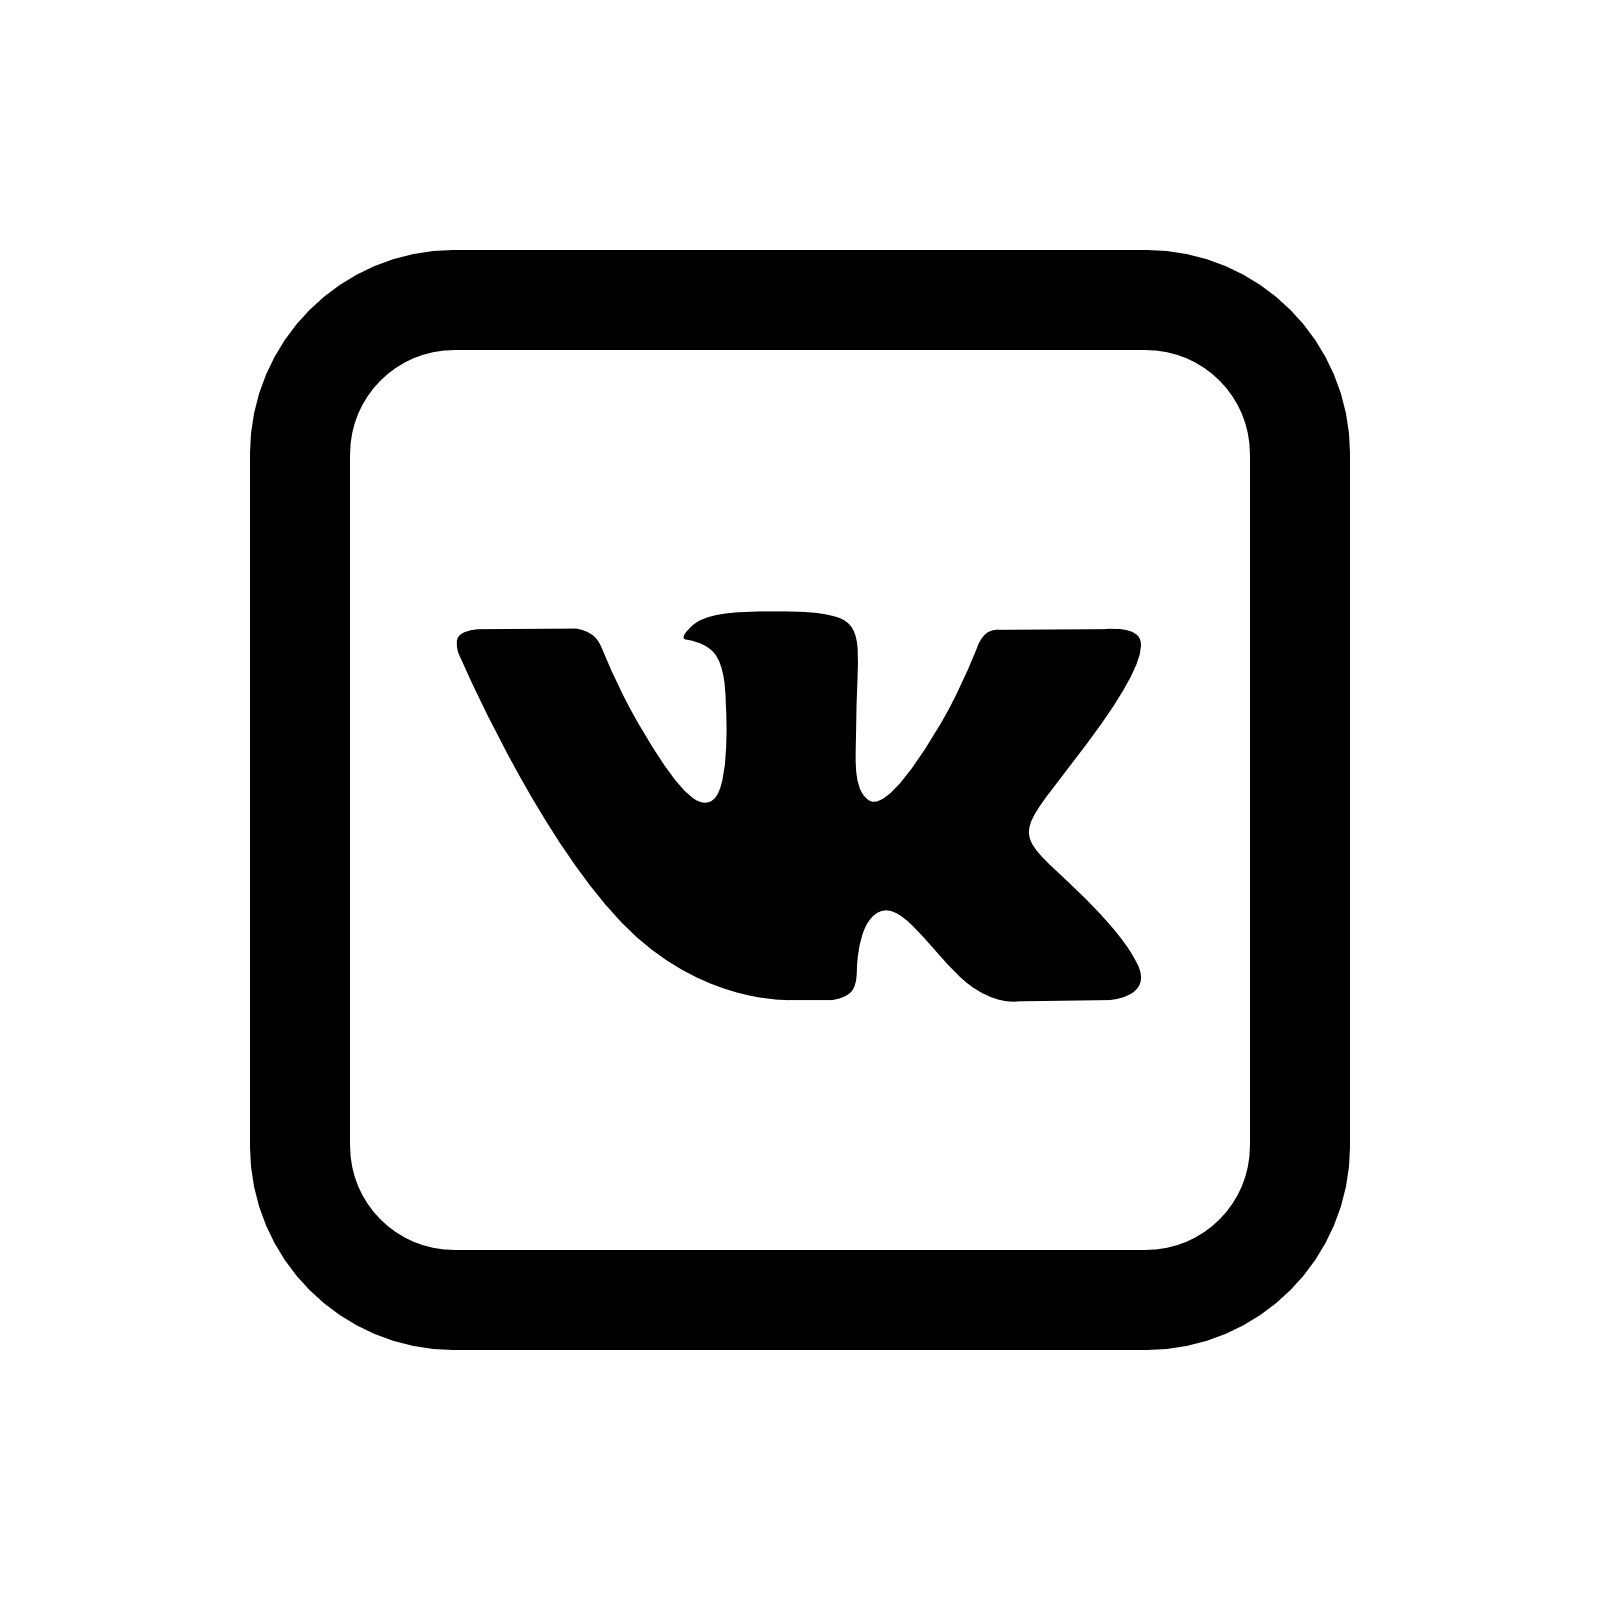 Значок ВК. Значок Вики. Значок ВК черный. Значок ВКОНТАКТЕ на прозрачном фоне. Tanukishop com